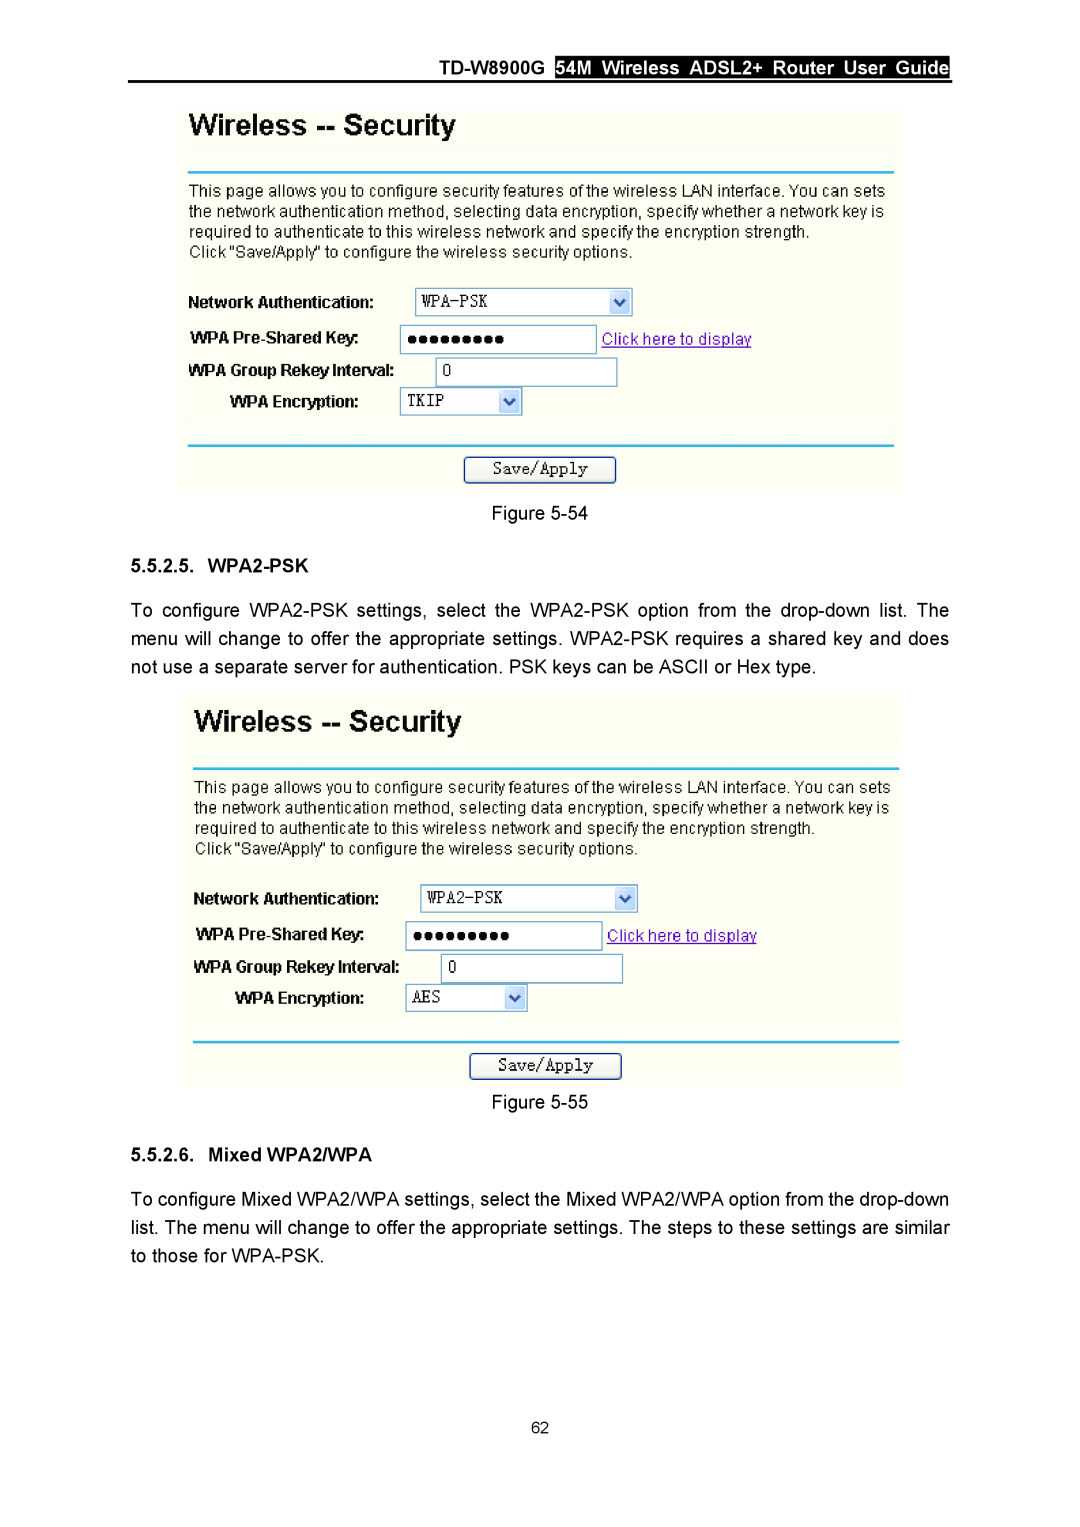 TP-Link manual TD-W8900G 54M Wireless ADSL2+ Router User Guide, WPA2-PSK, Mixed WPA2/WPA 